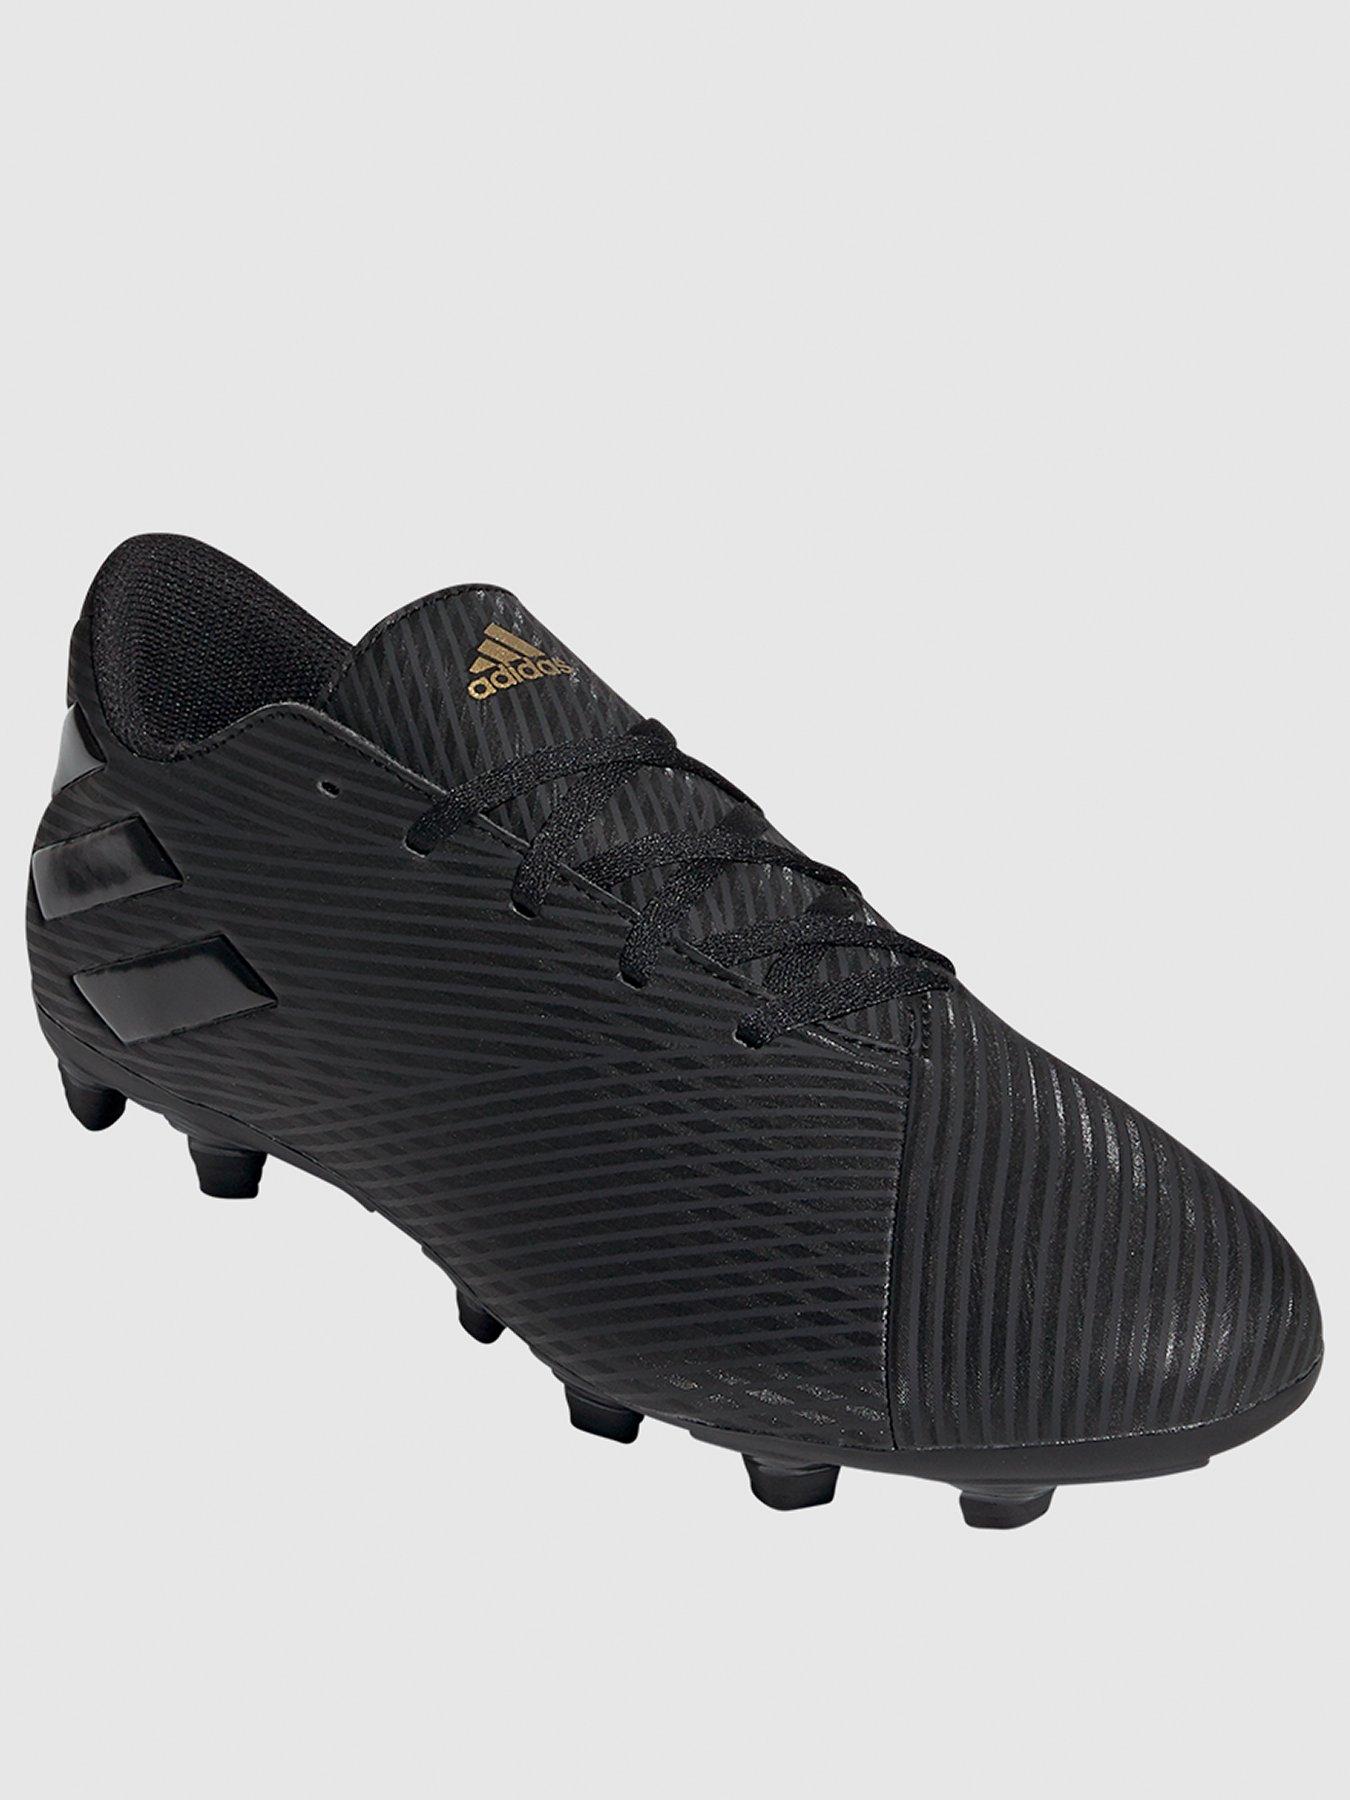 black friday football boots uk